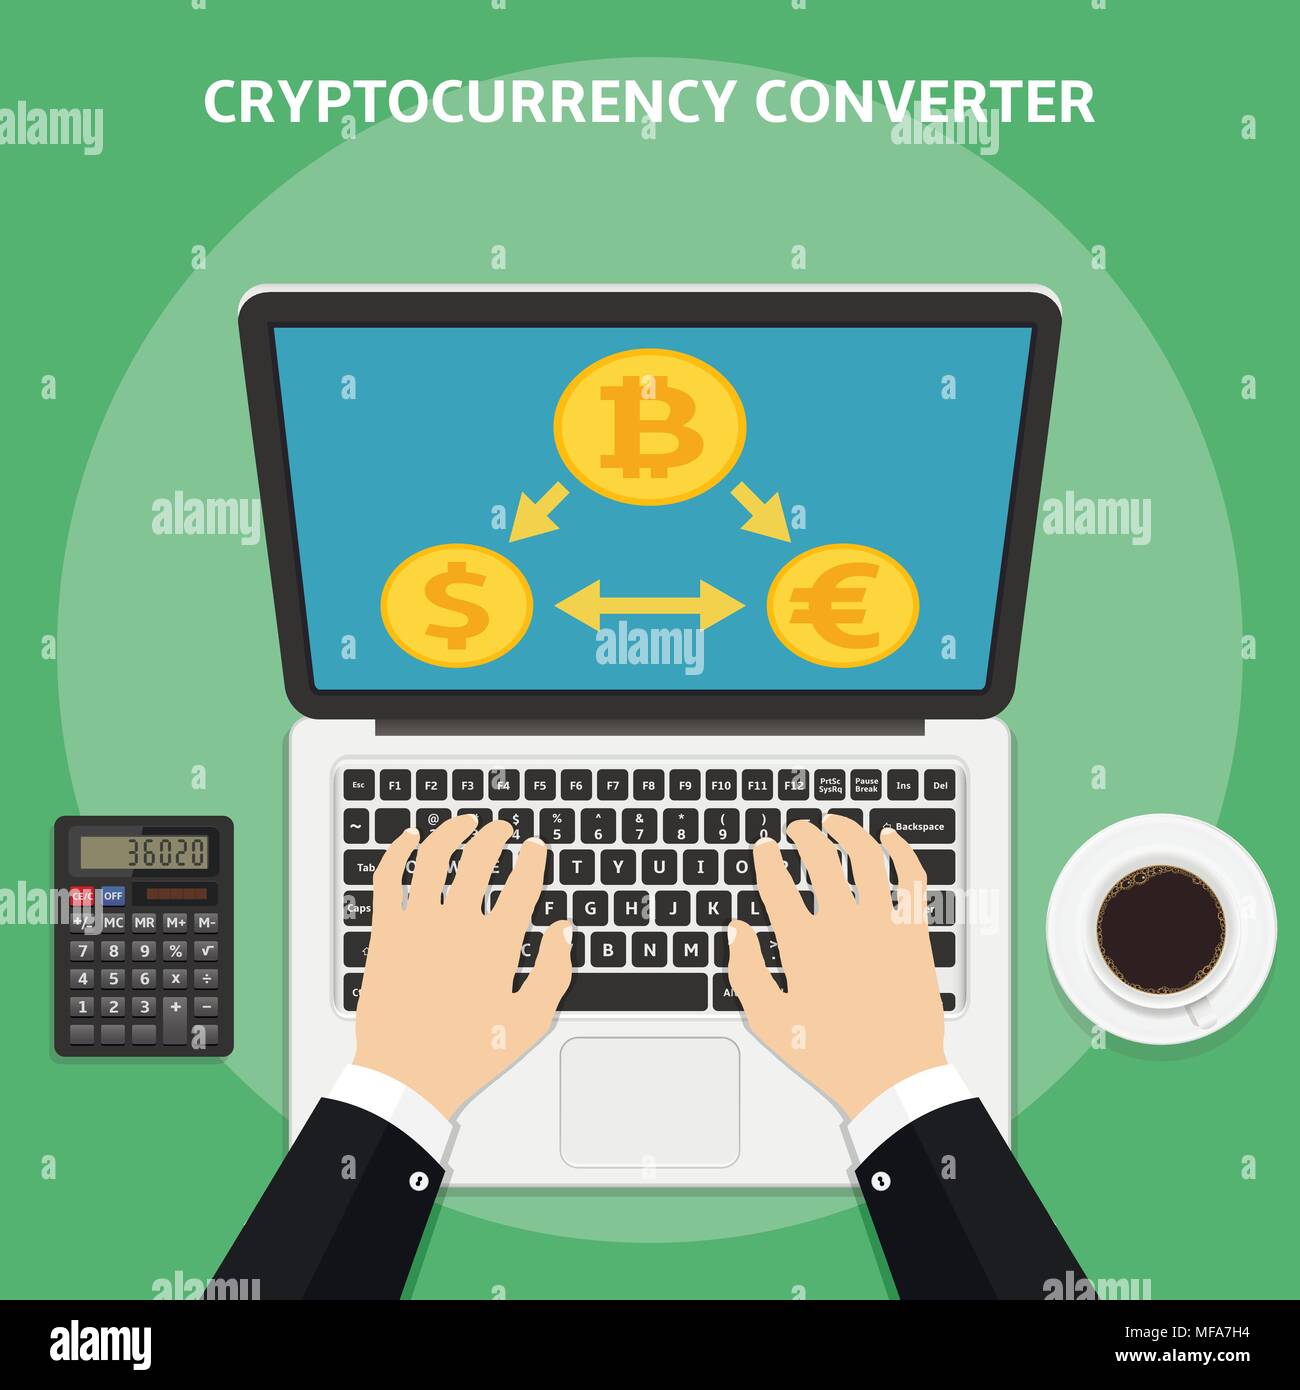 Crypto Price Calculator And Converter - Cryptocurrency Calculator Bitcoin Currency Converter ...